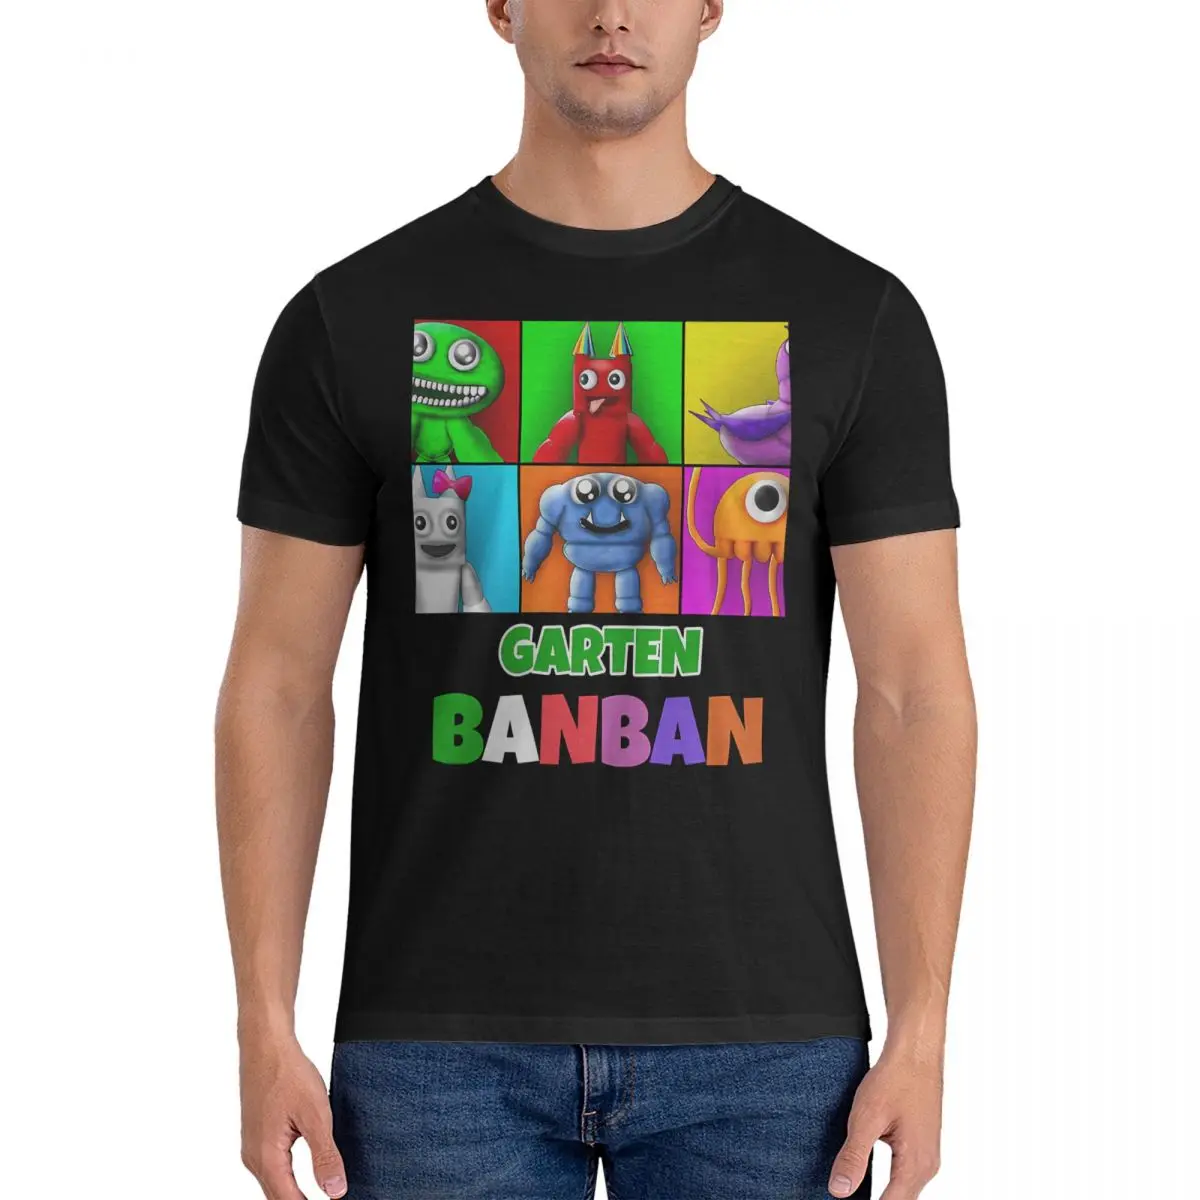 

Men Game T Shirts Garten Of Banban 100% Cotton Clothing Amazing Short Sleeve Round Collar Tees Gift Idea T-Shirt